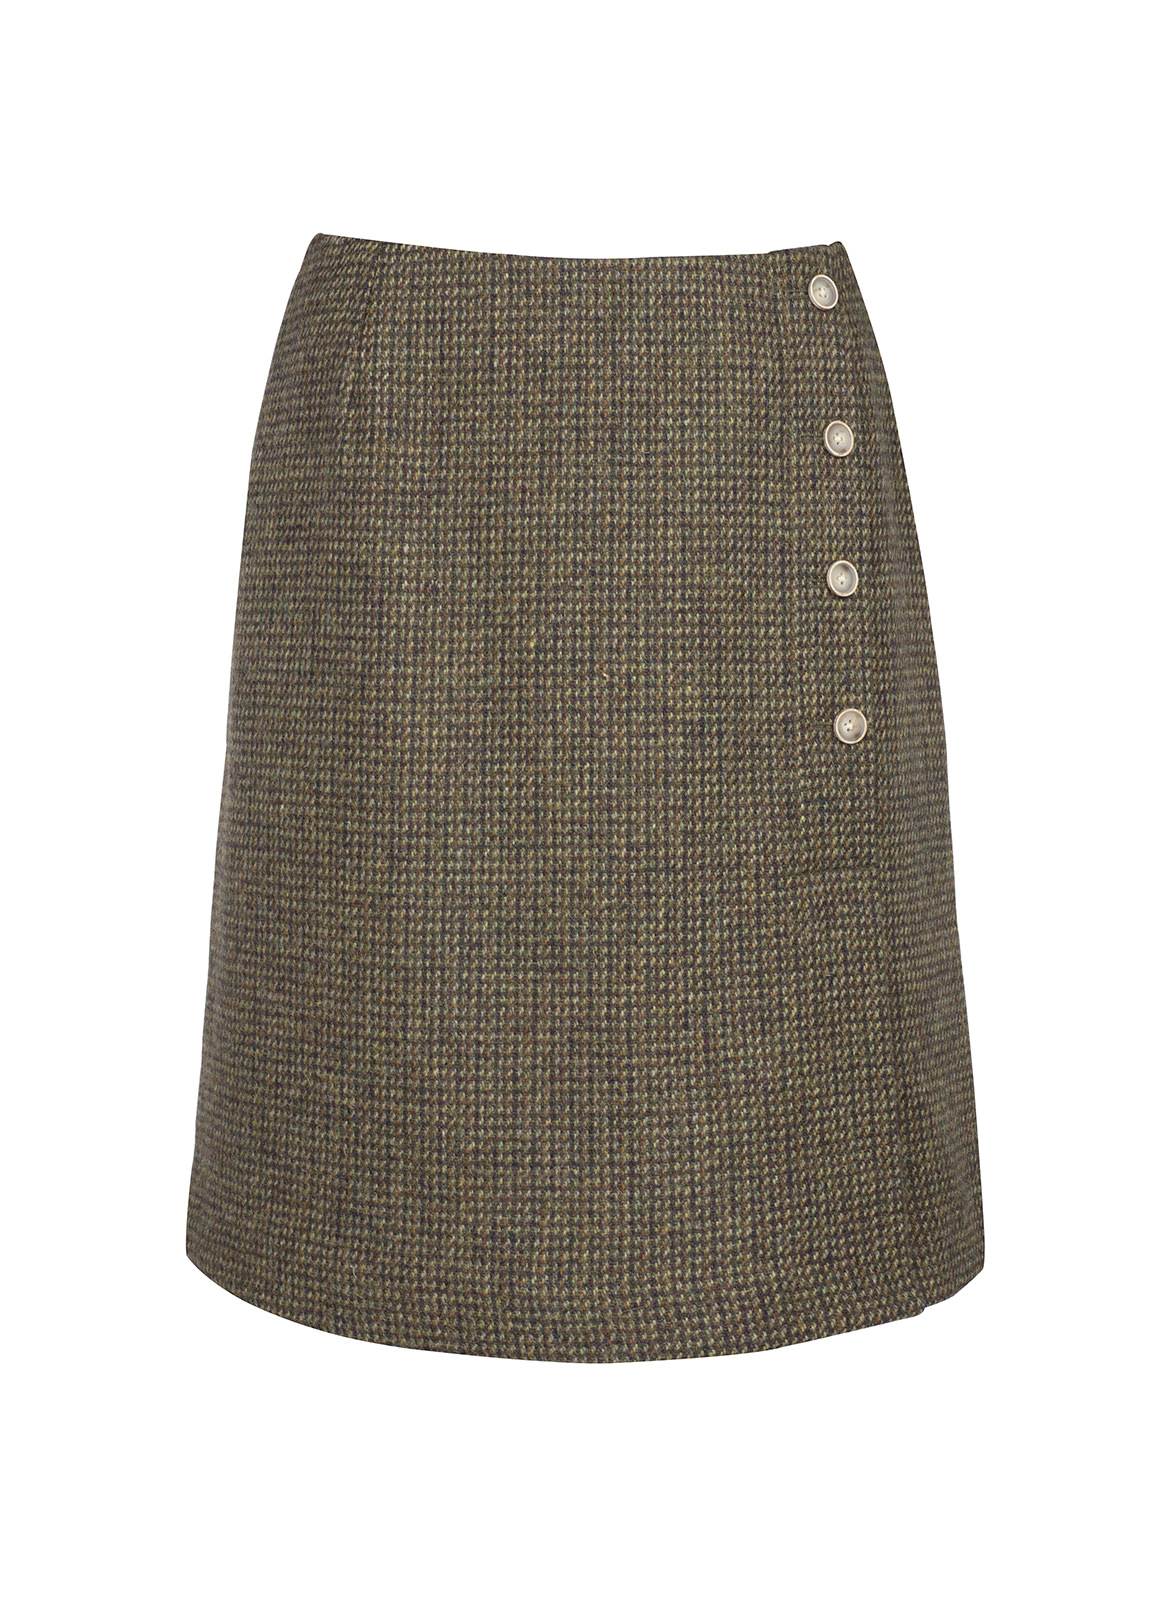 Marjoram Slim Tweed Skirt | Dubarry of Ireland